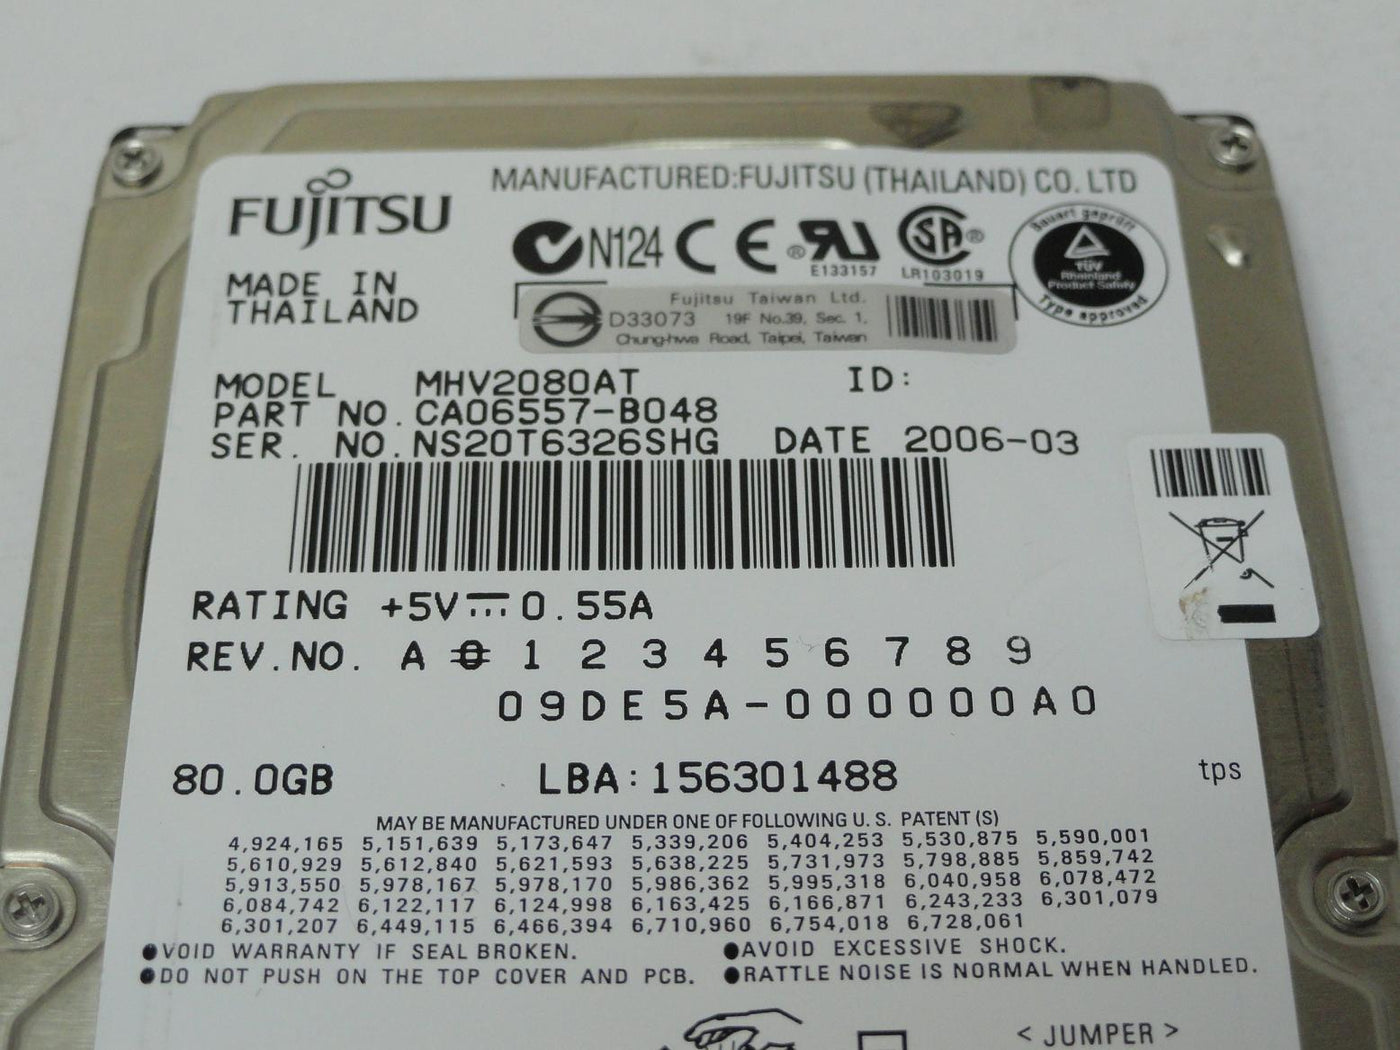 PR00237_CA06557-B048_Fujitsu 80GB IDE 4200rpm 2.5in HDD - Image3